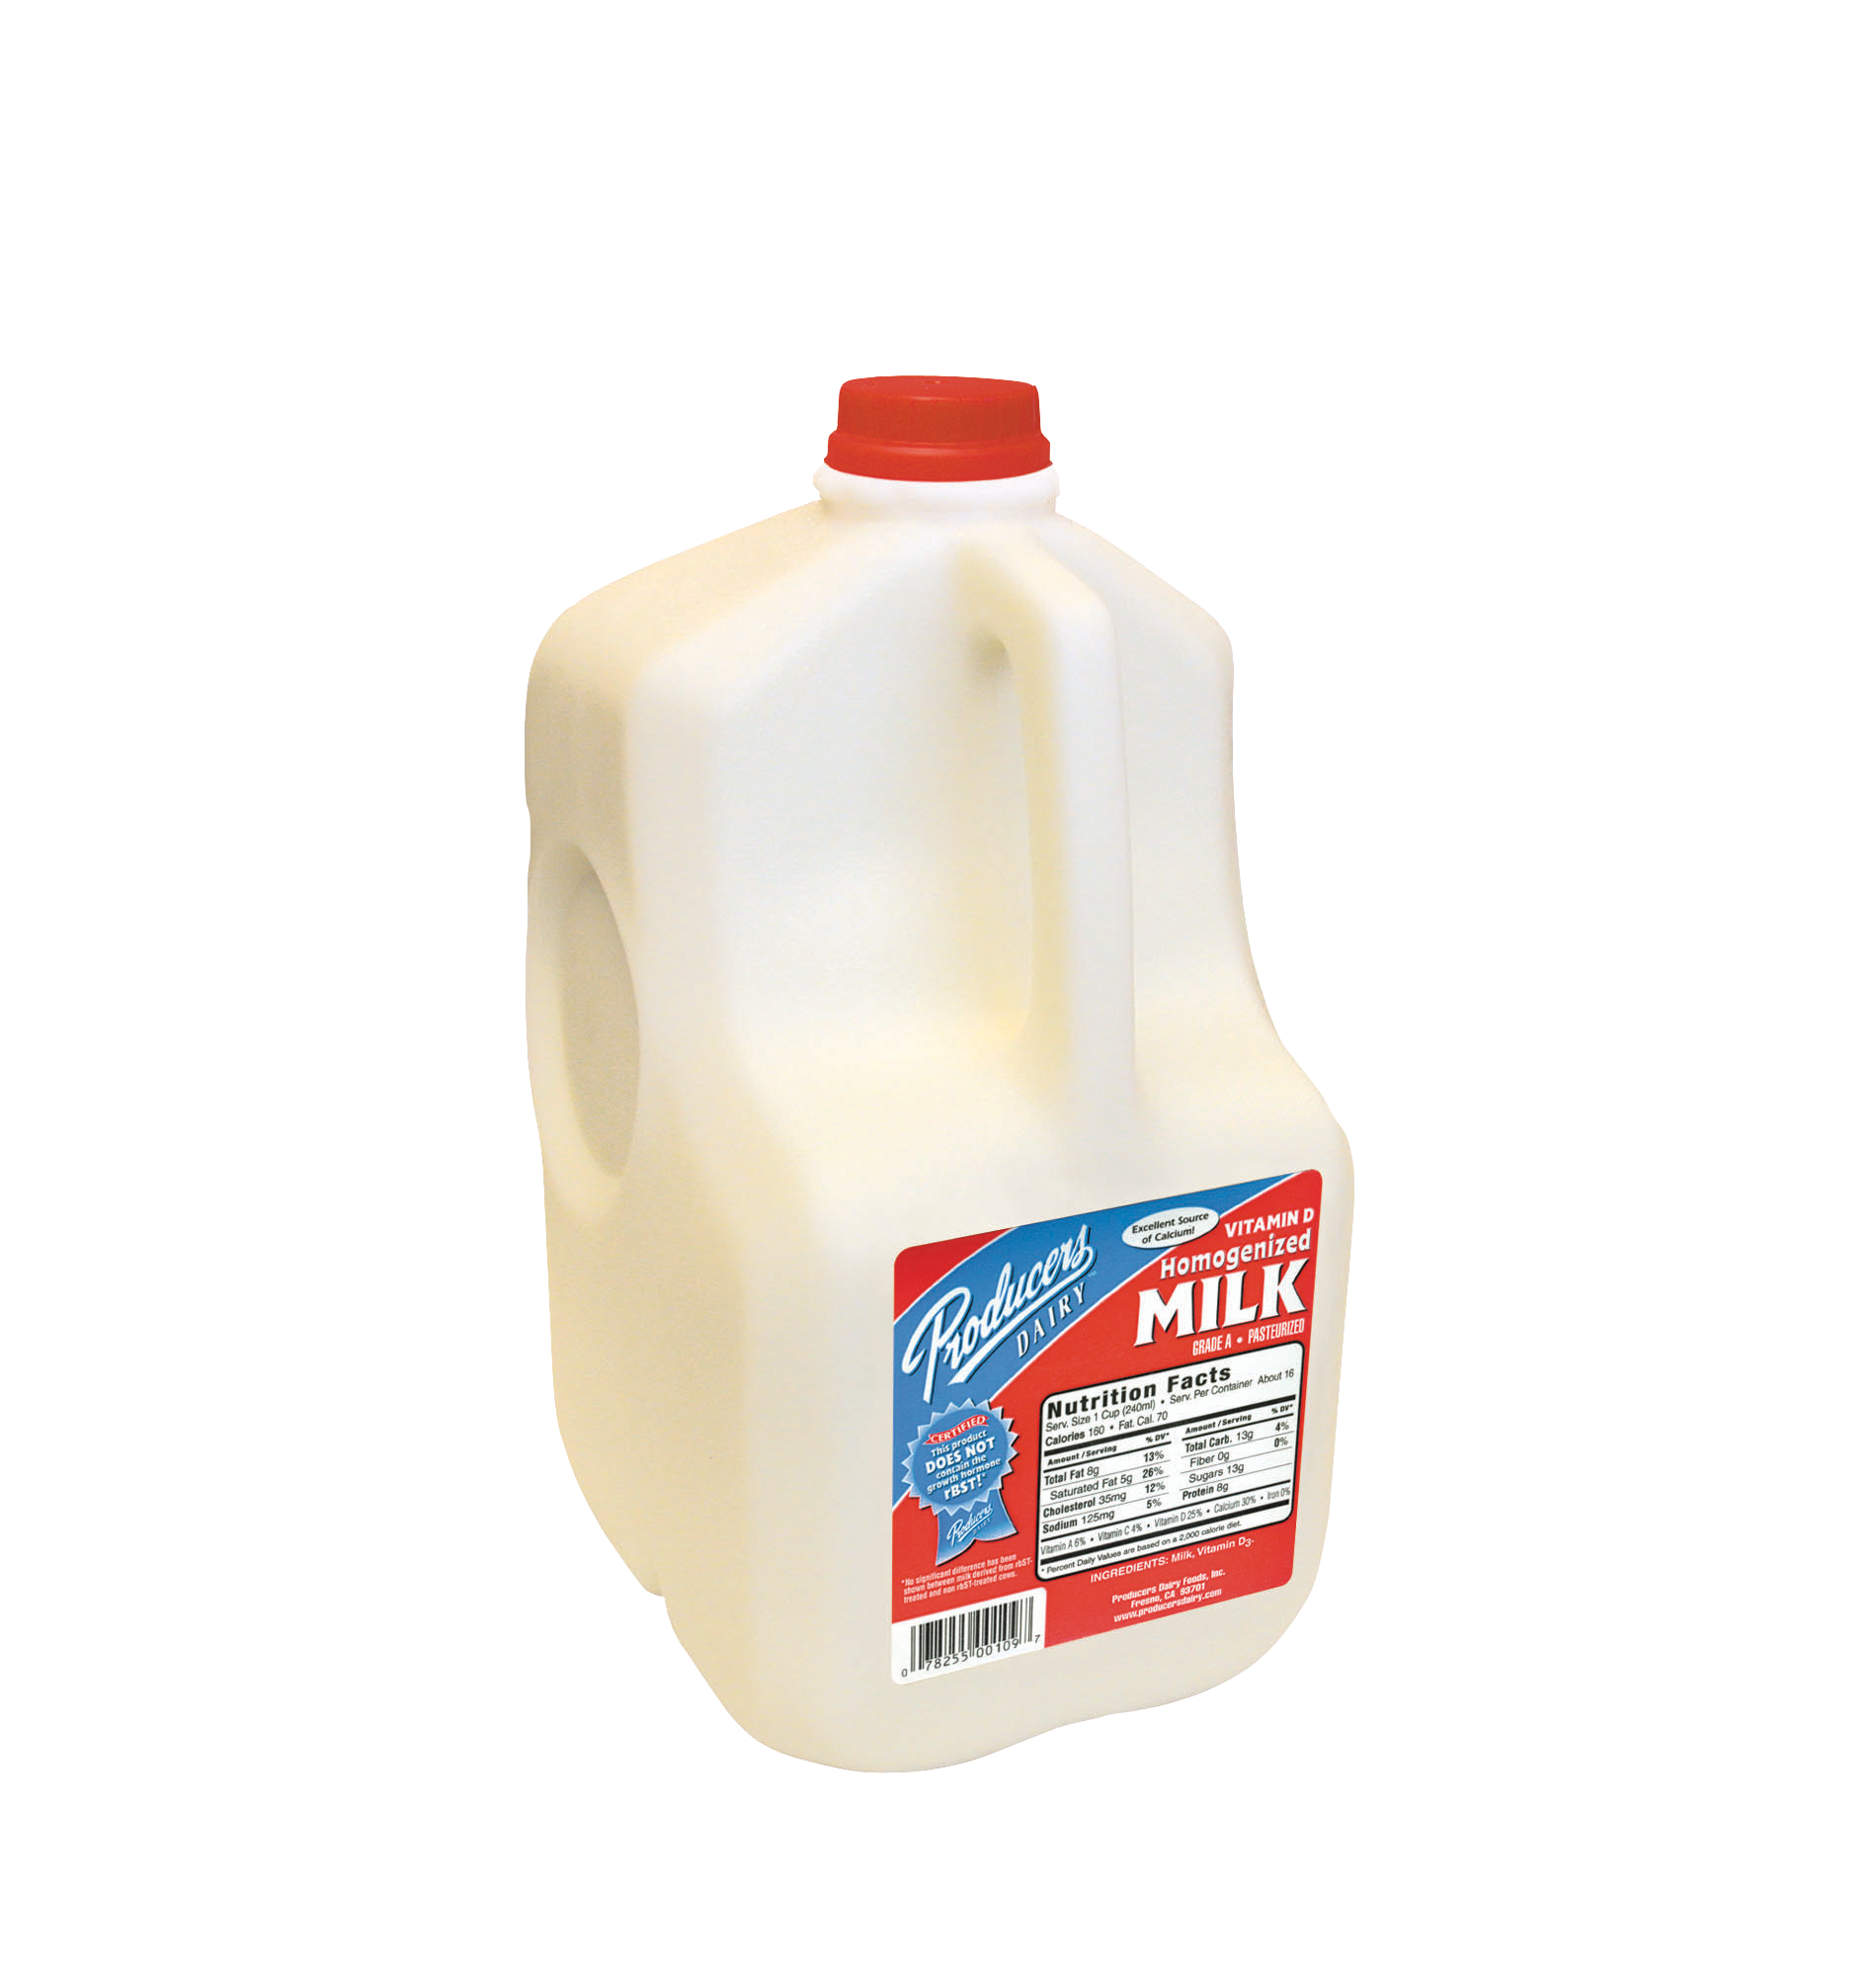 Producers Dairy original Whole Milk plastic gallon container